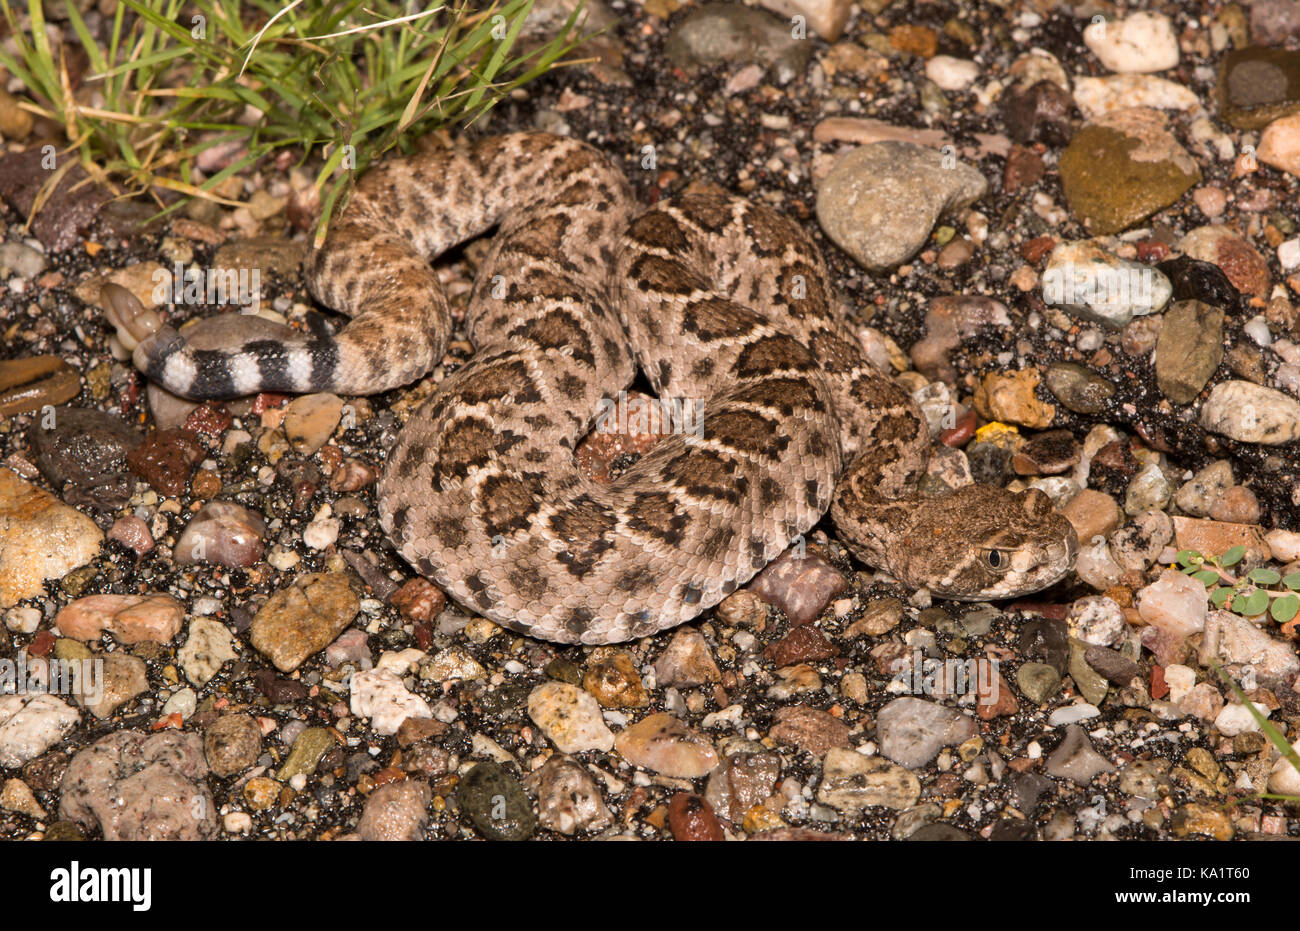 Western Diamond-backed Rattlesnake (Crotalus atrox) from Santa Cruz County, Arizona, USA. Stock Photo